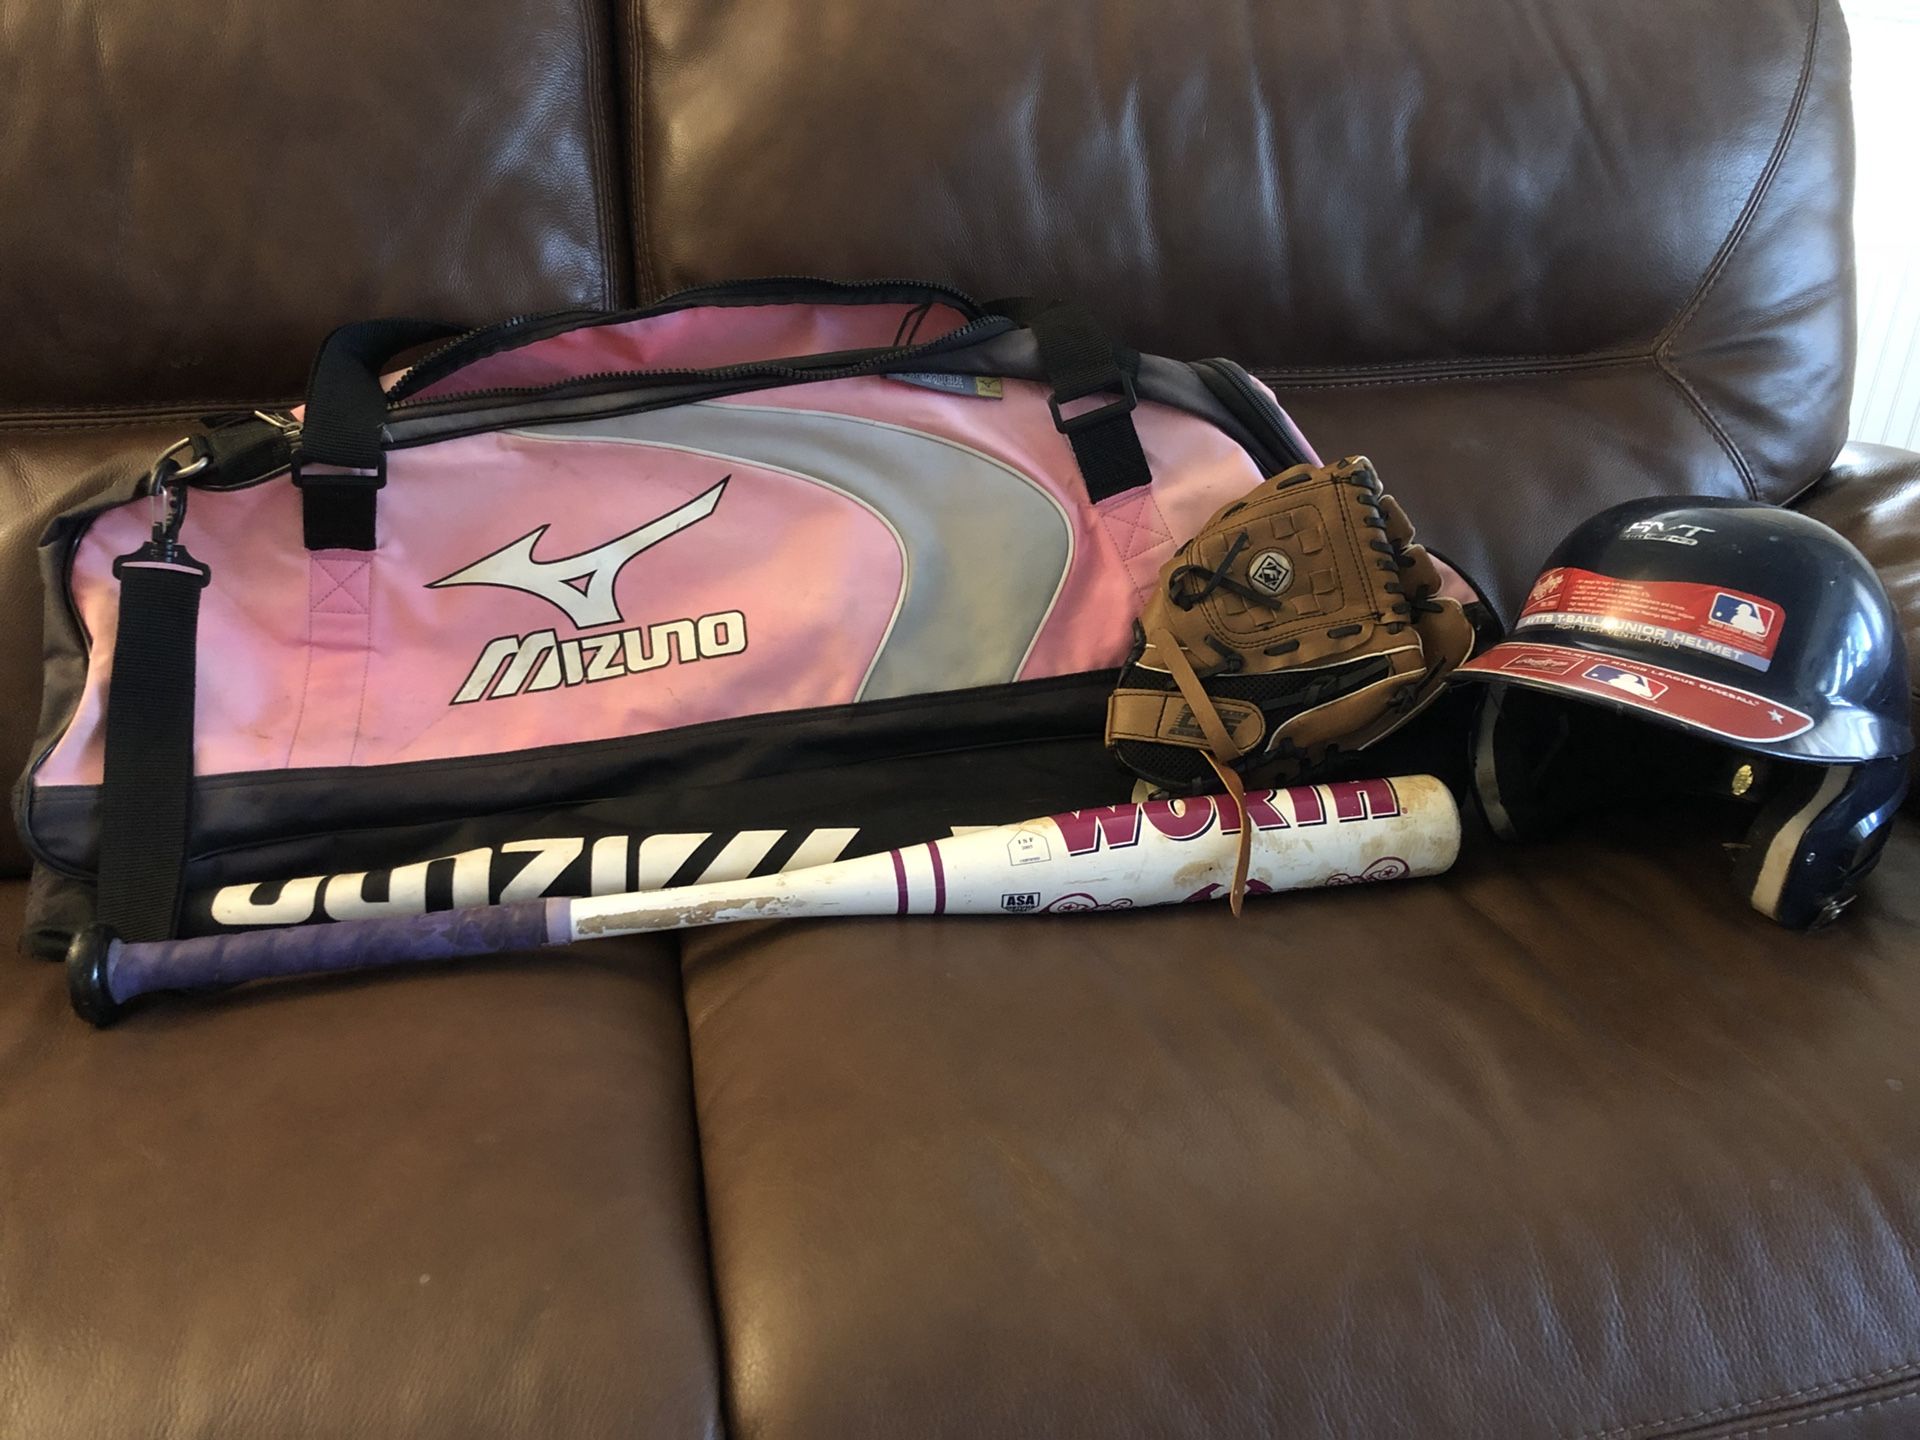 Girls bat bag, softball bat, and unisex glove and helmet